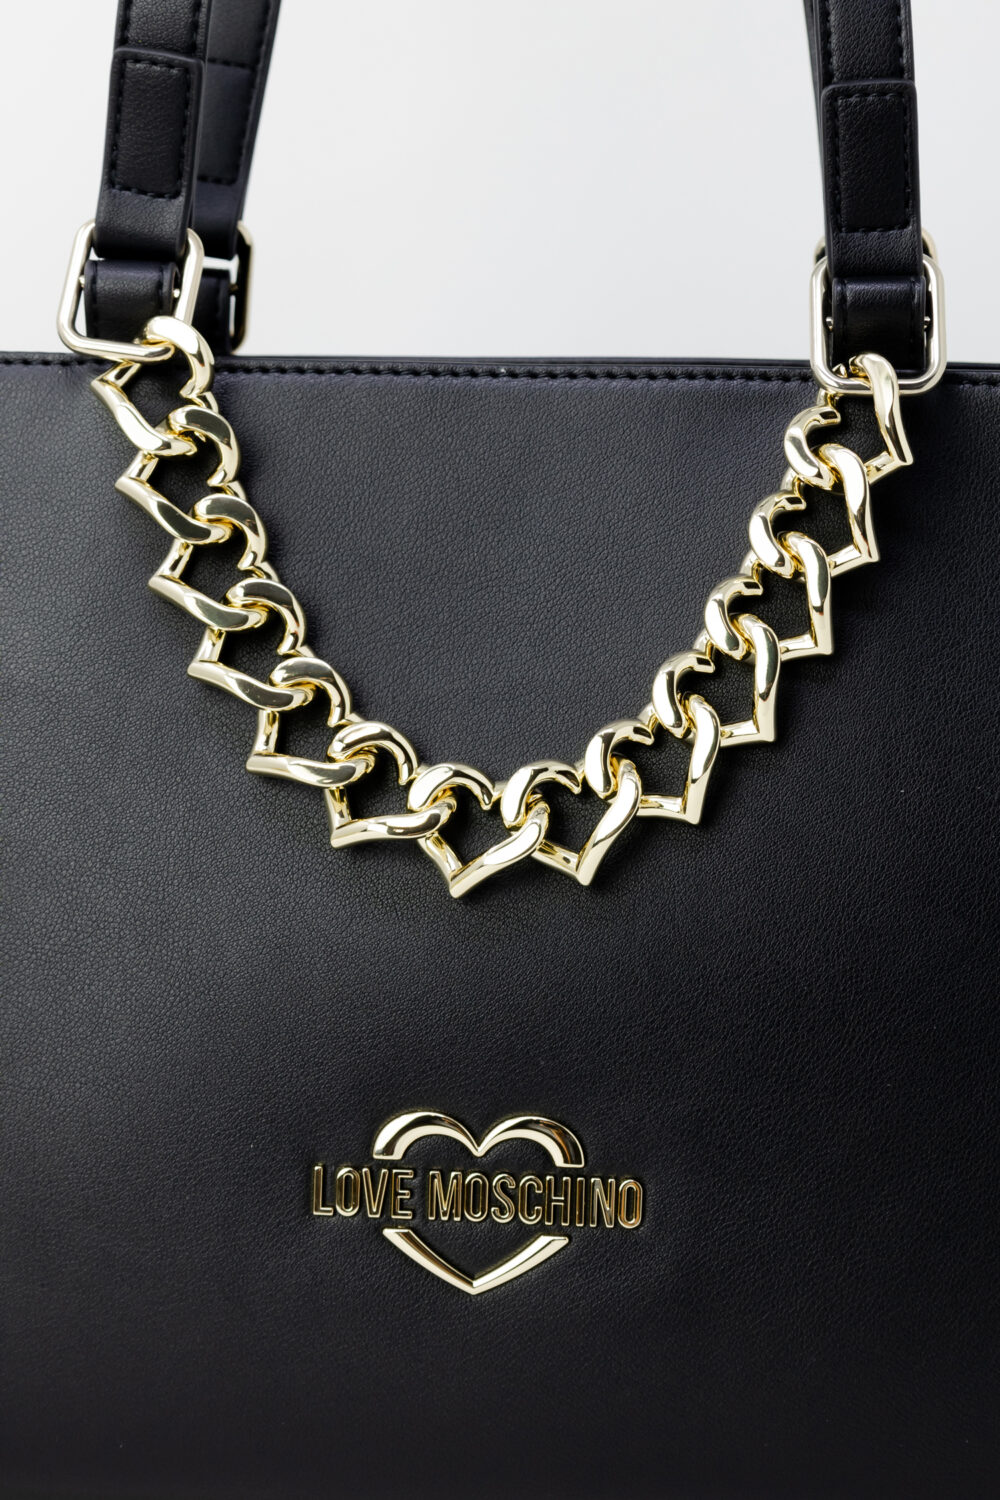 Borsa Love Moschino LOGO GOLD Nero - Foto 2